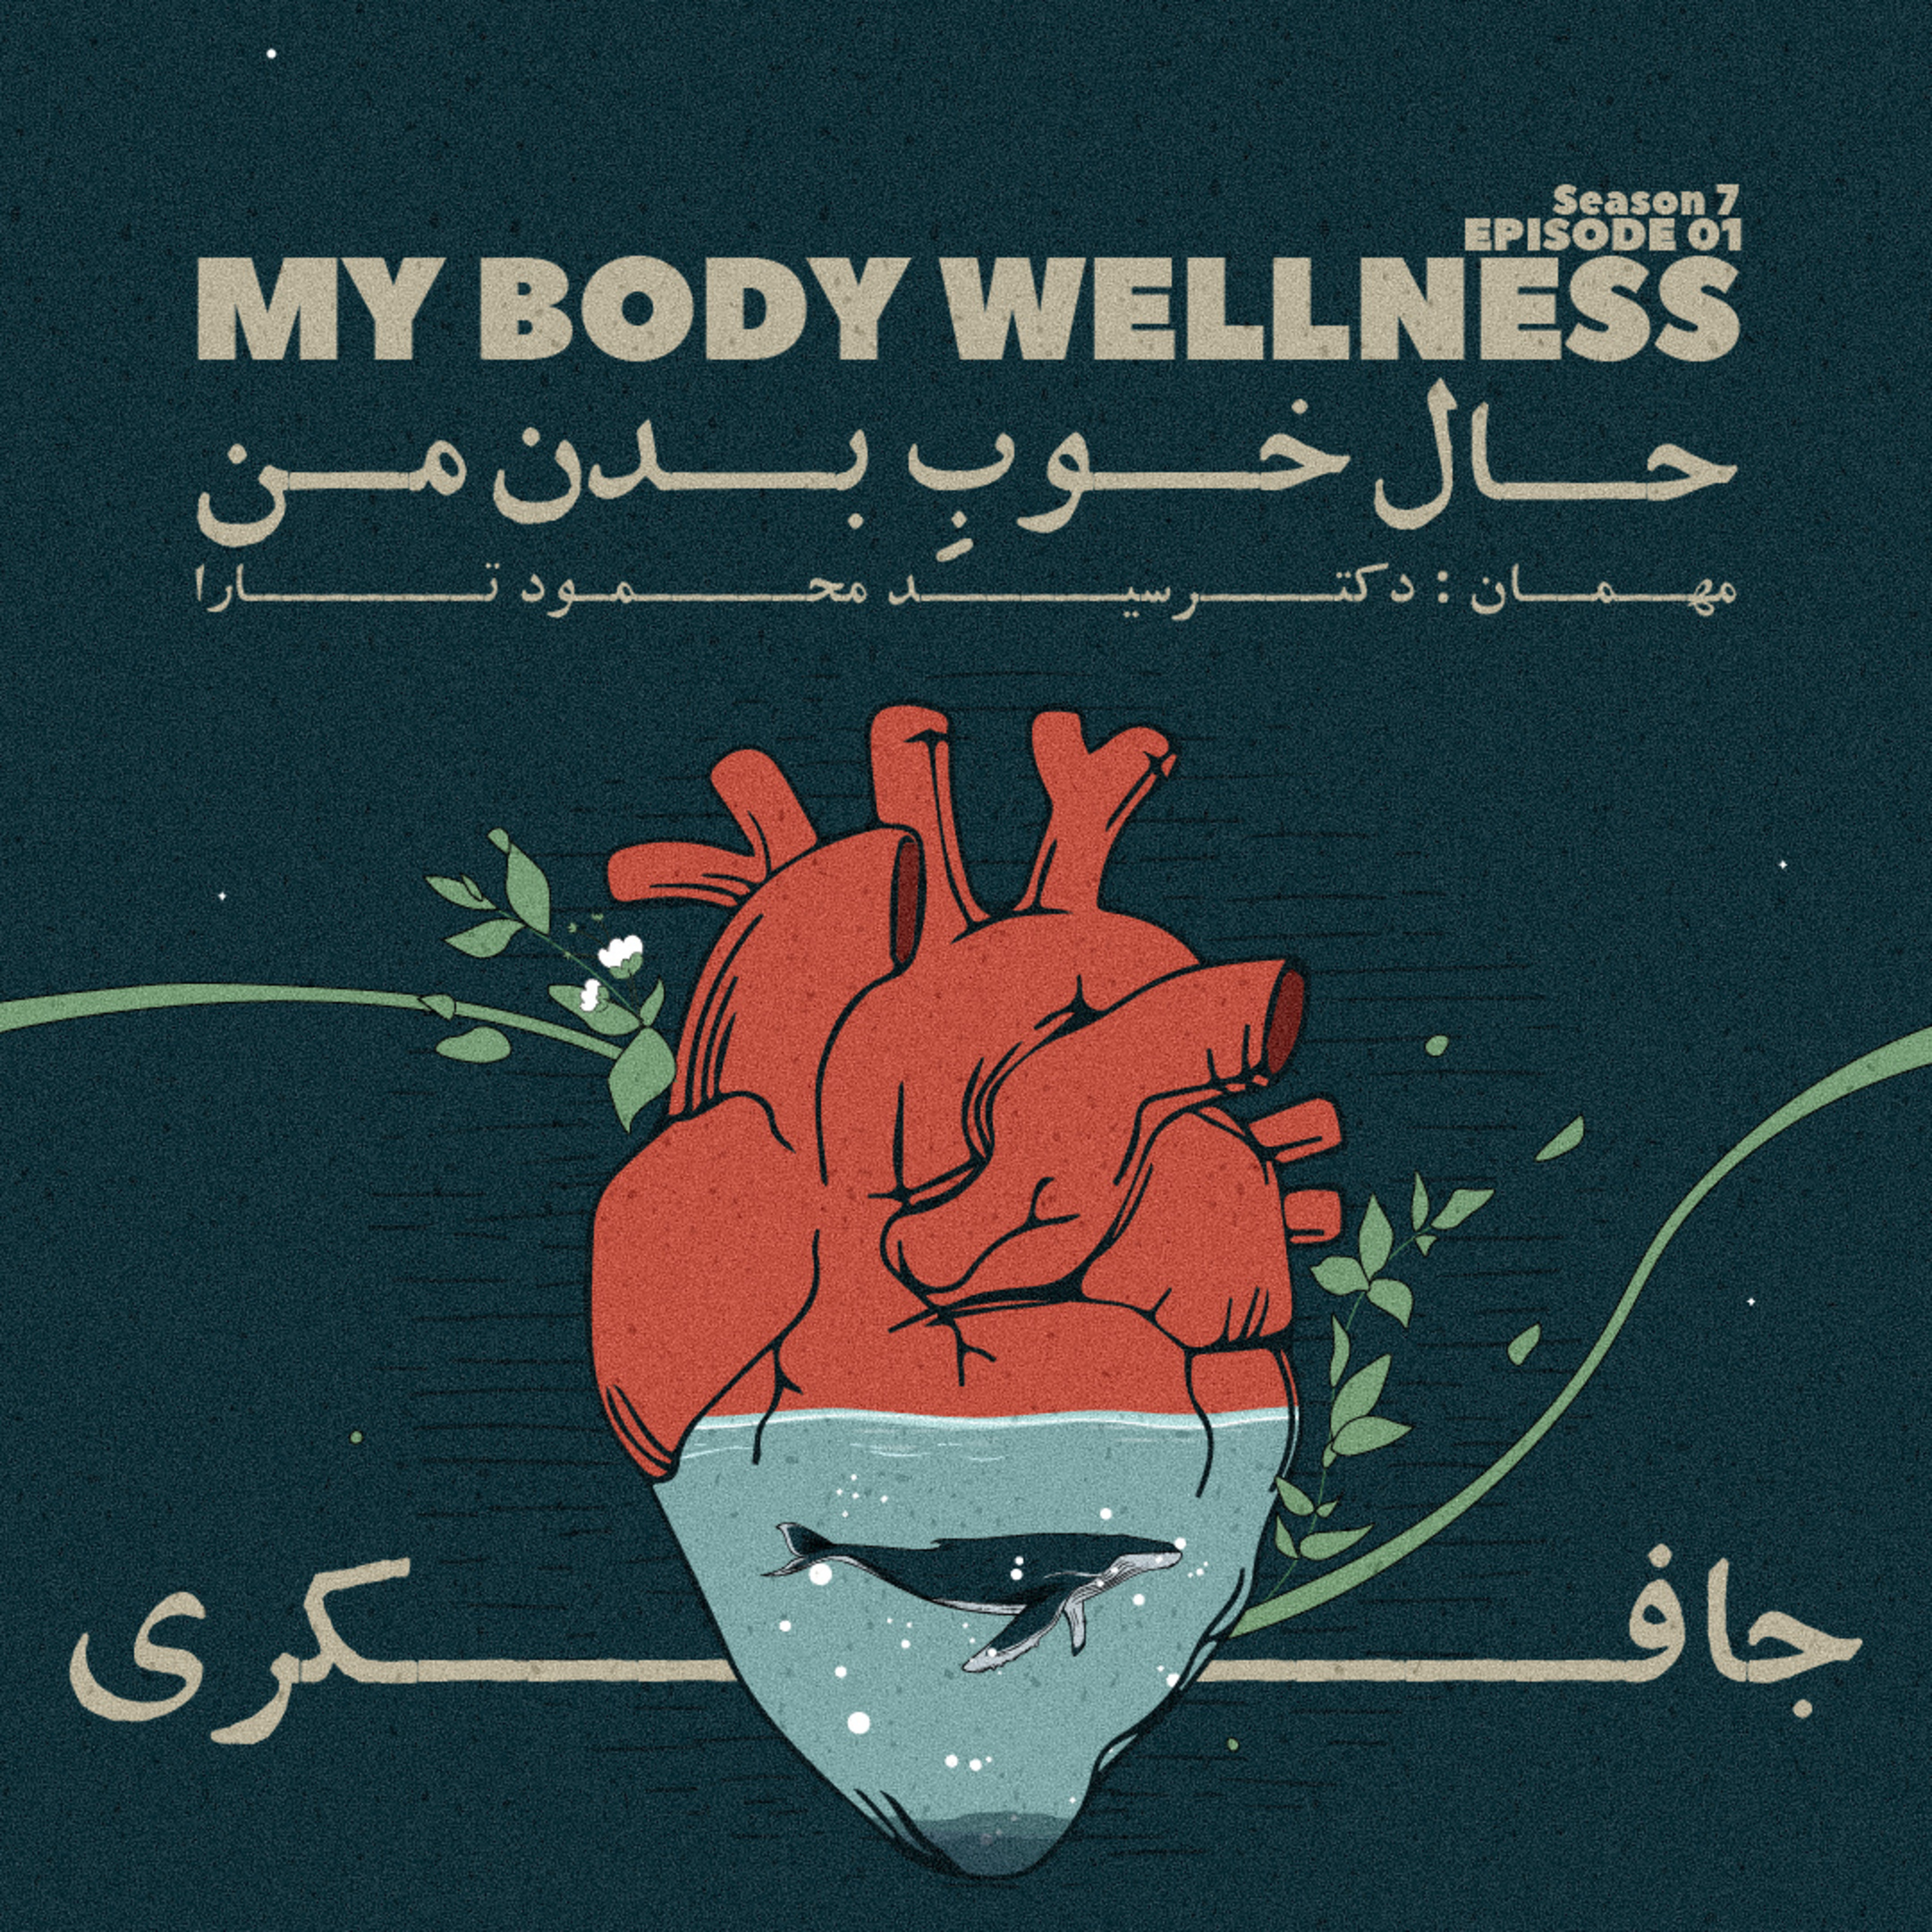 Episode 01 - My Body Wellness (حال خوب بدن من)